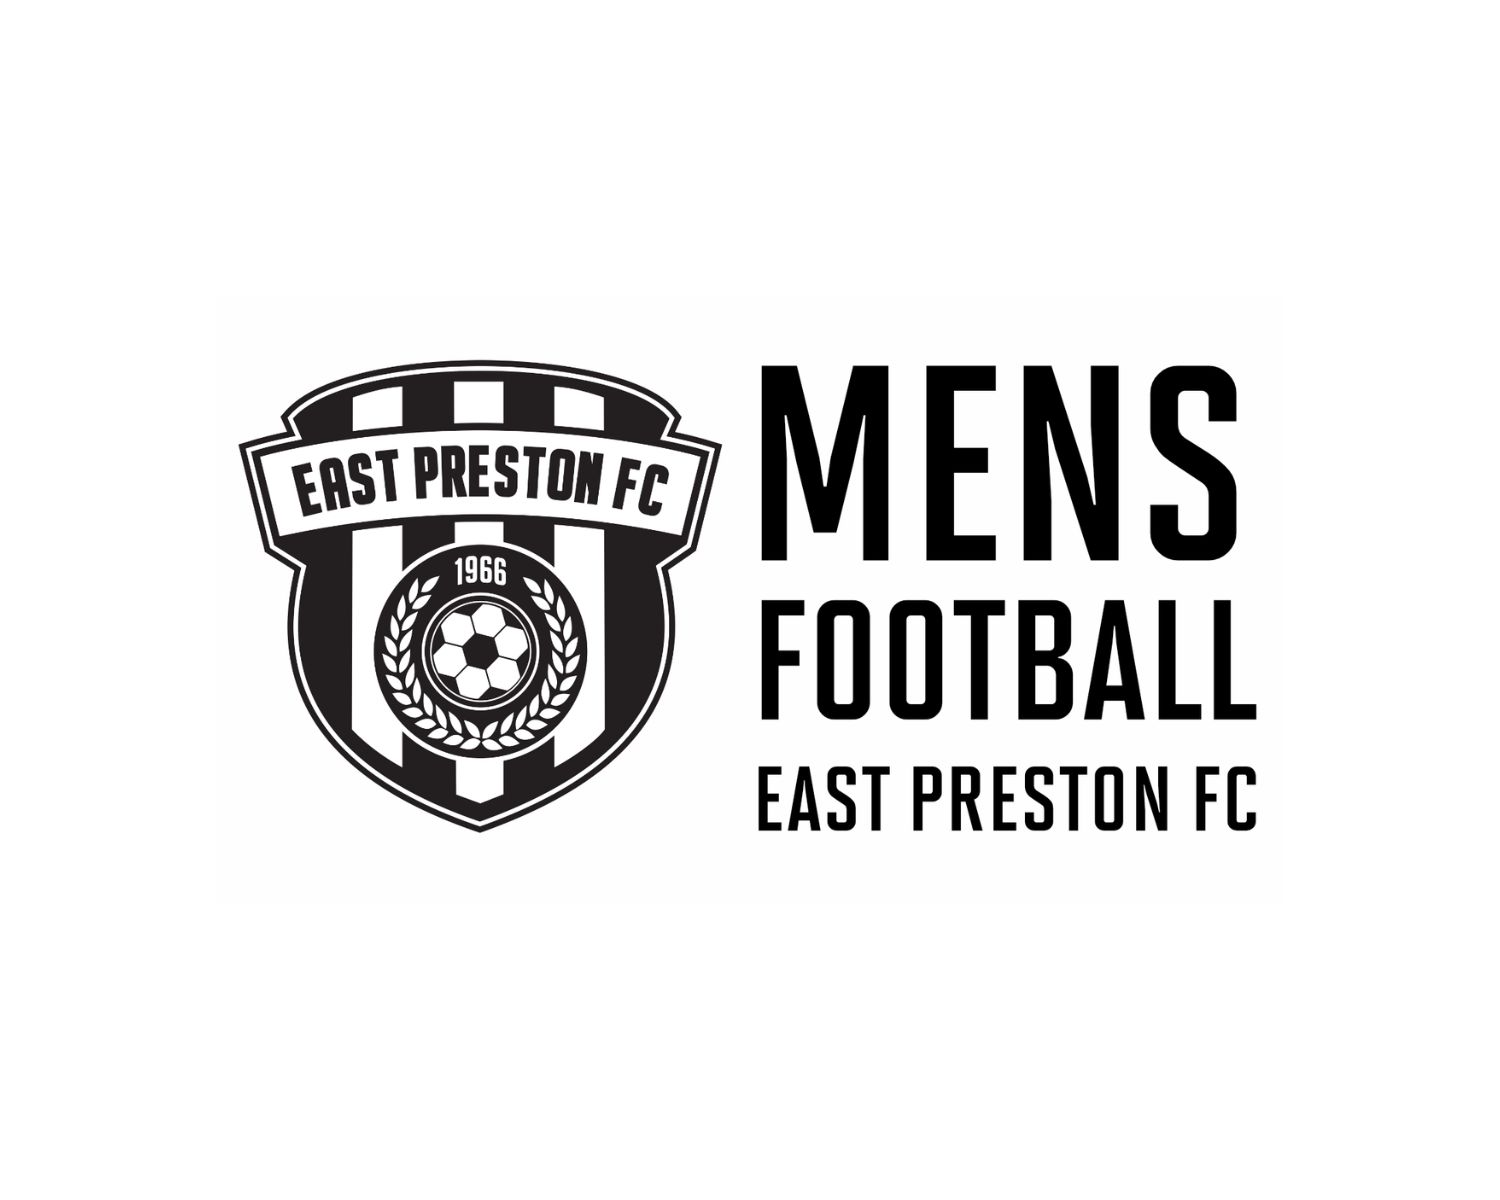 East Preston FC: 10 Football Club Facts - Facts.net